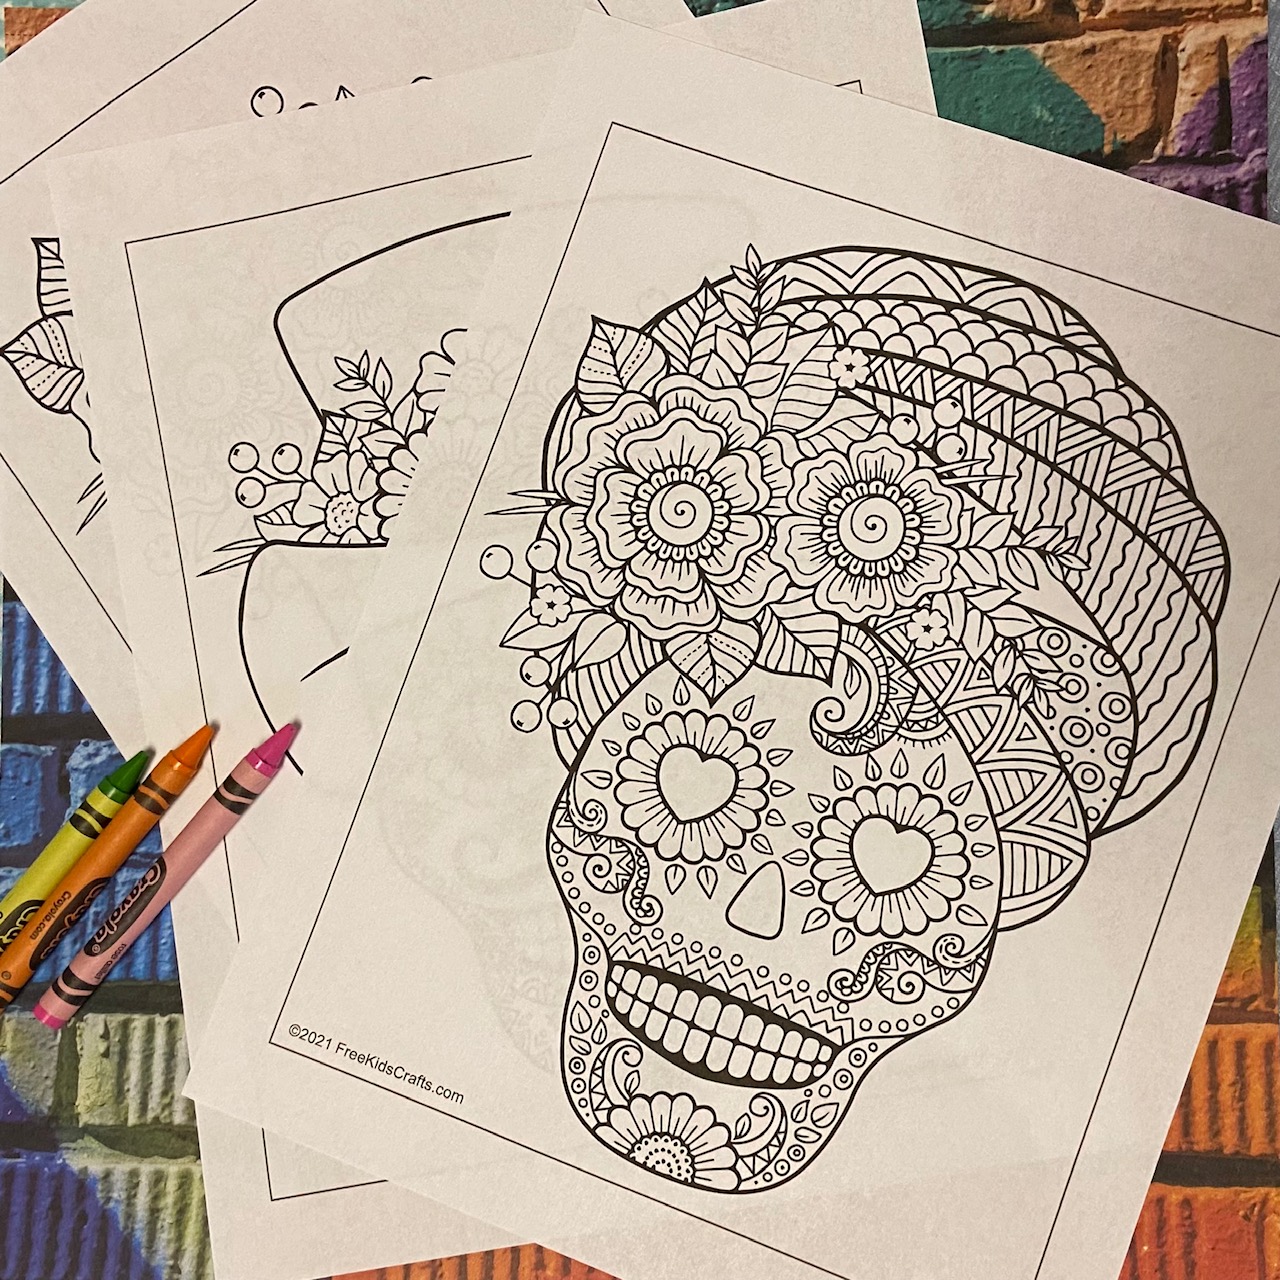 coloring pages of sugar skulls